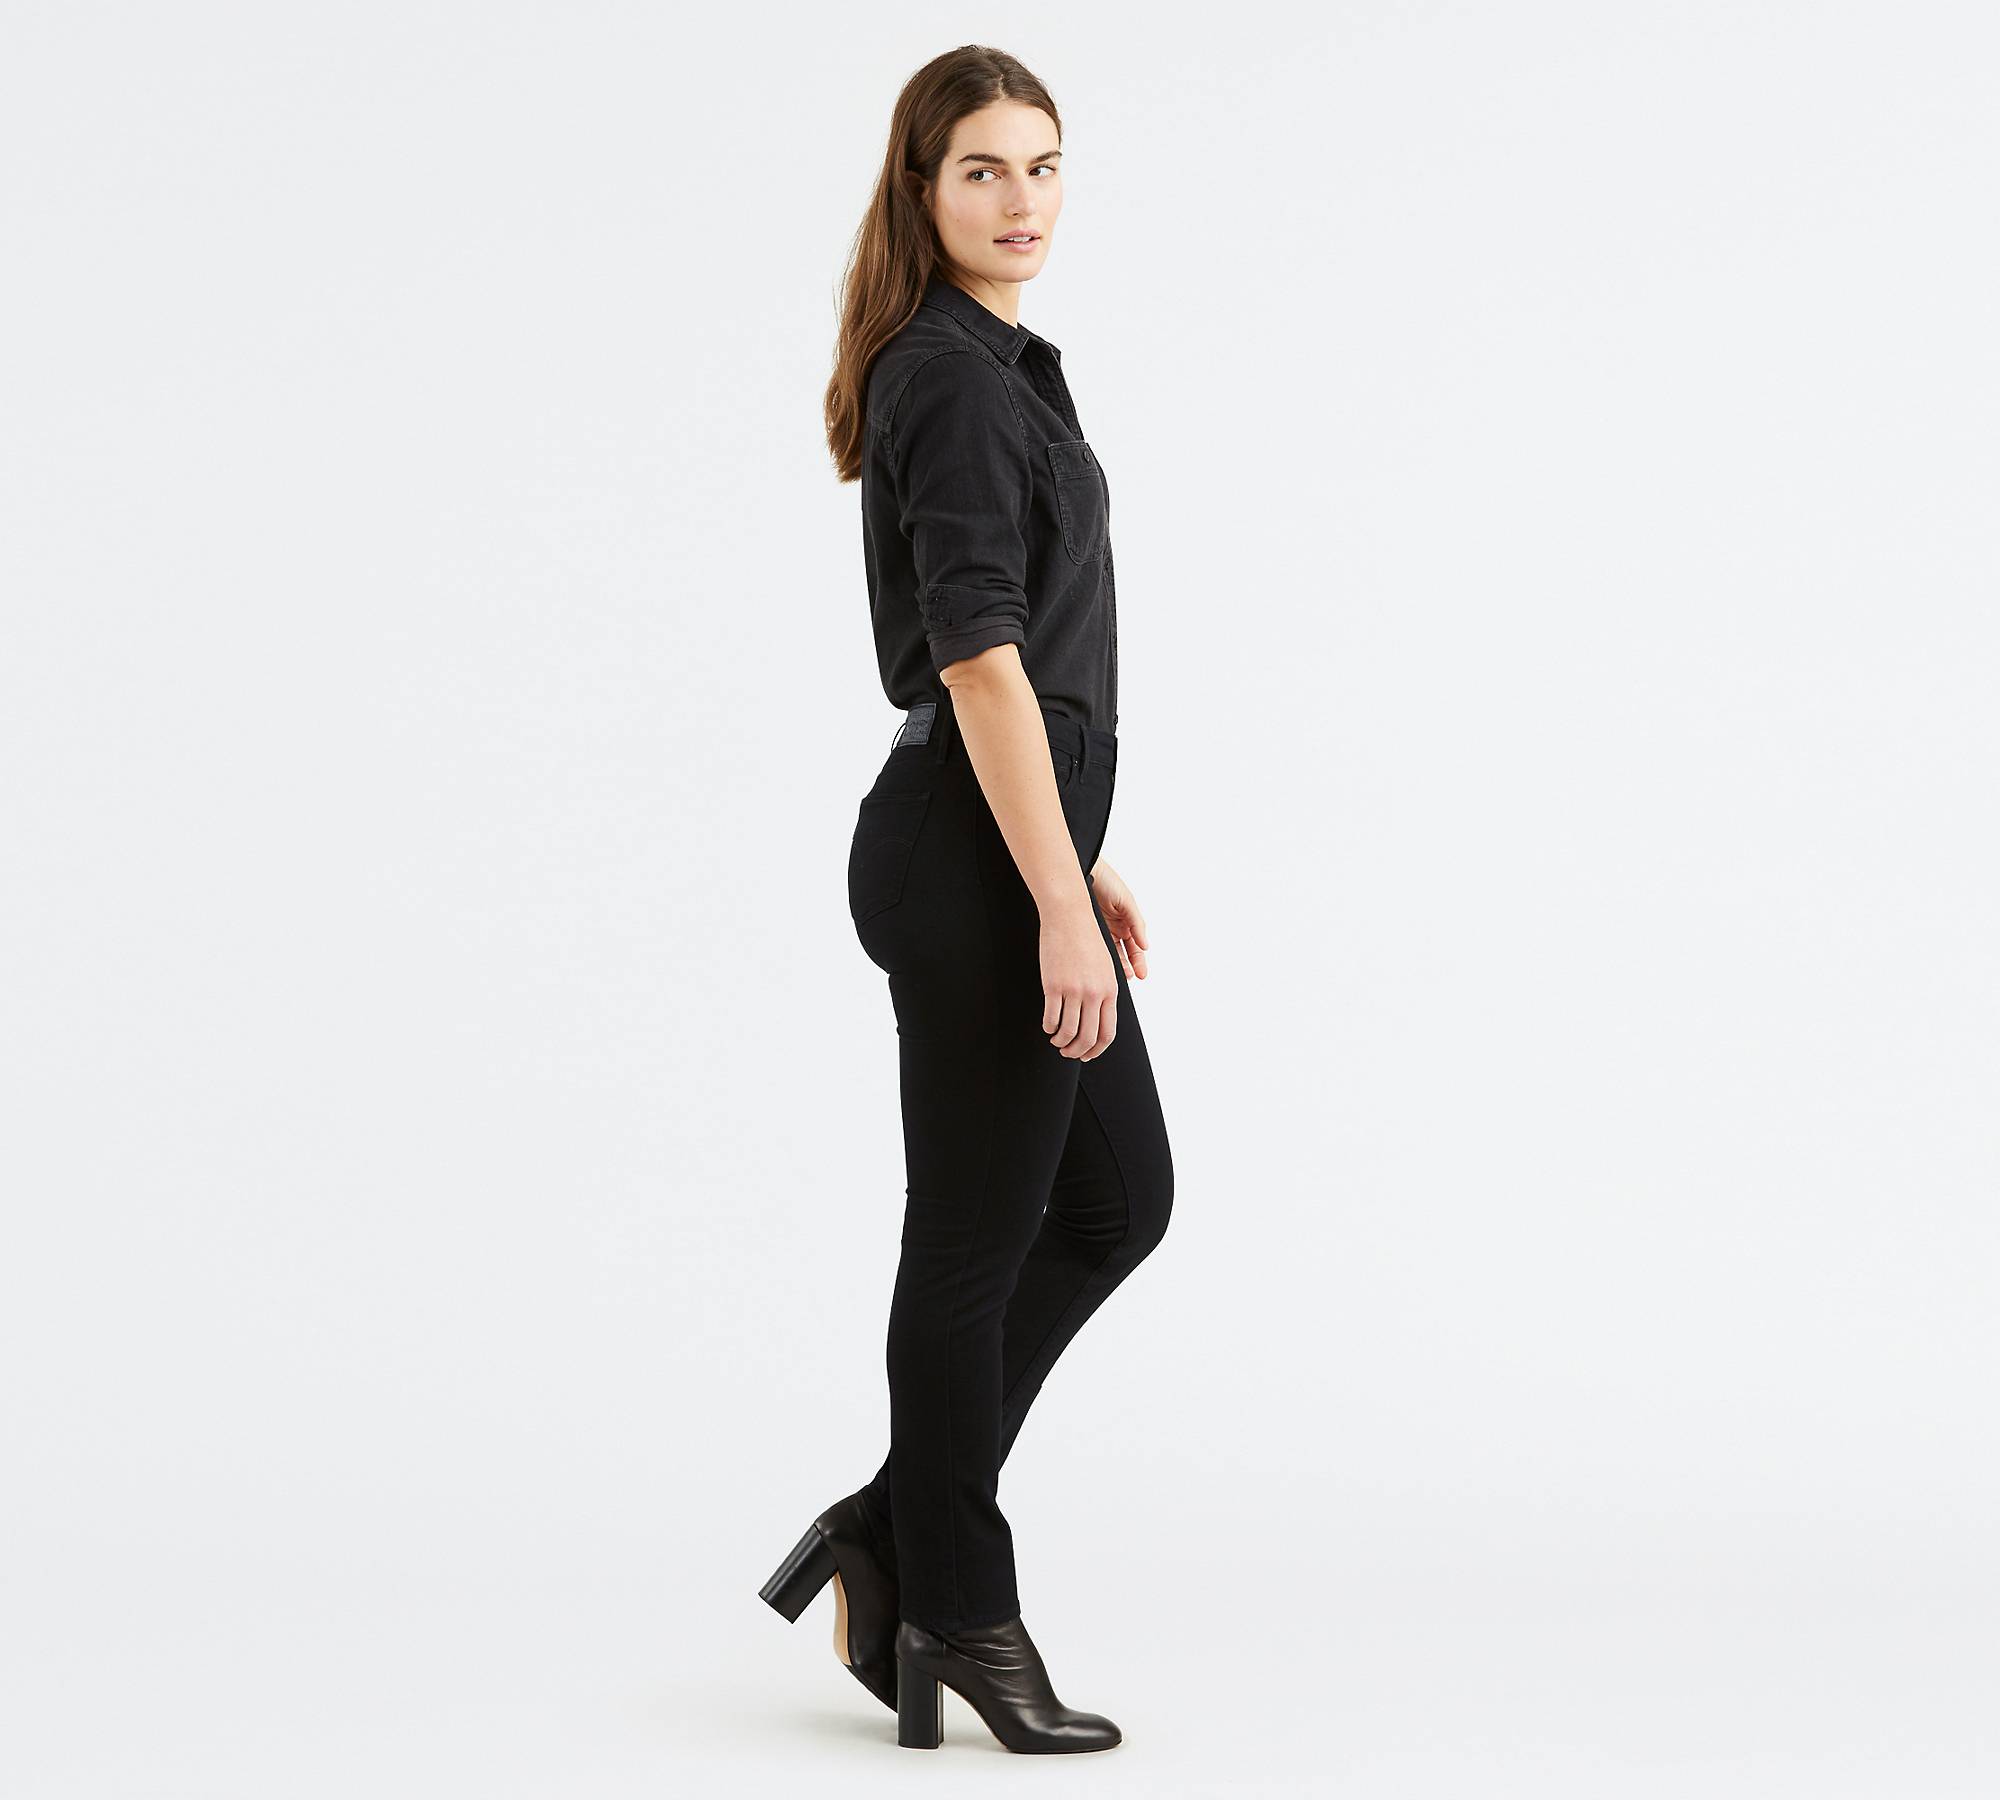 712 Slim Women's Jeans - Black | Levi's® US